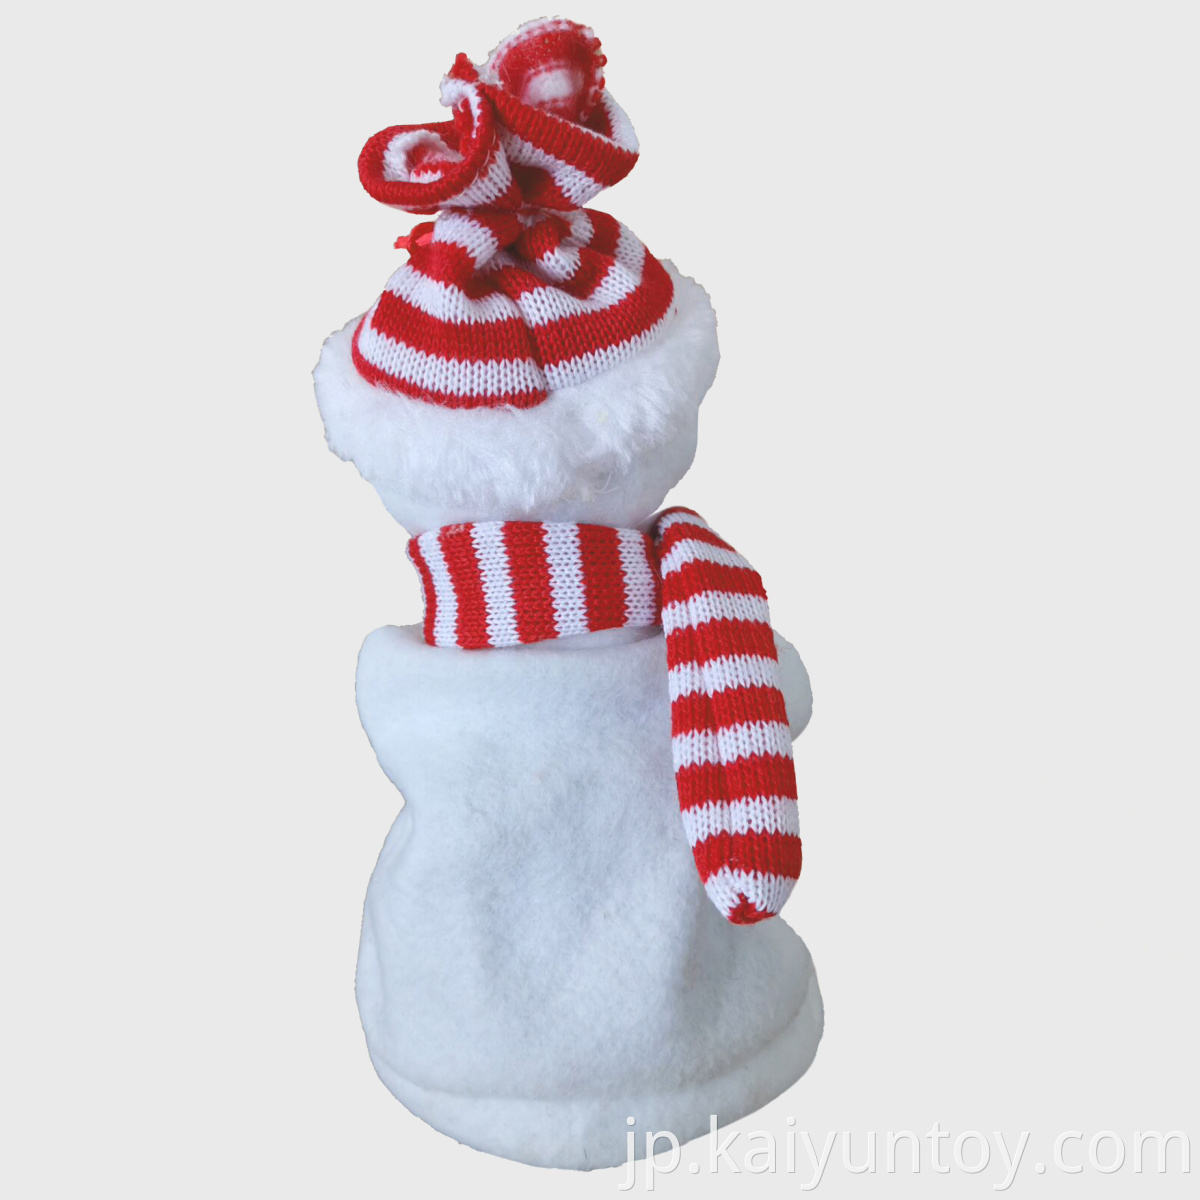 snowman family ornaments